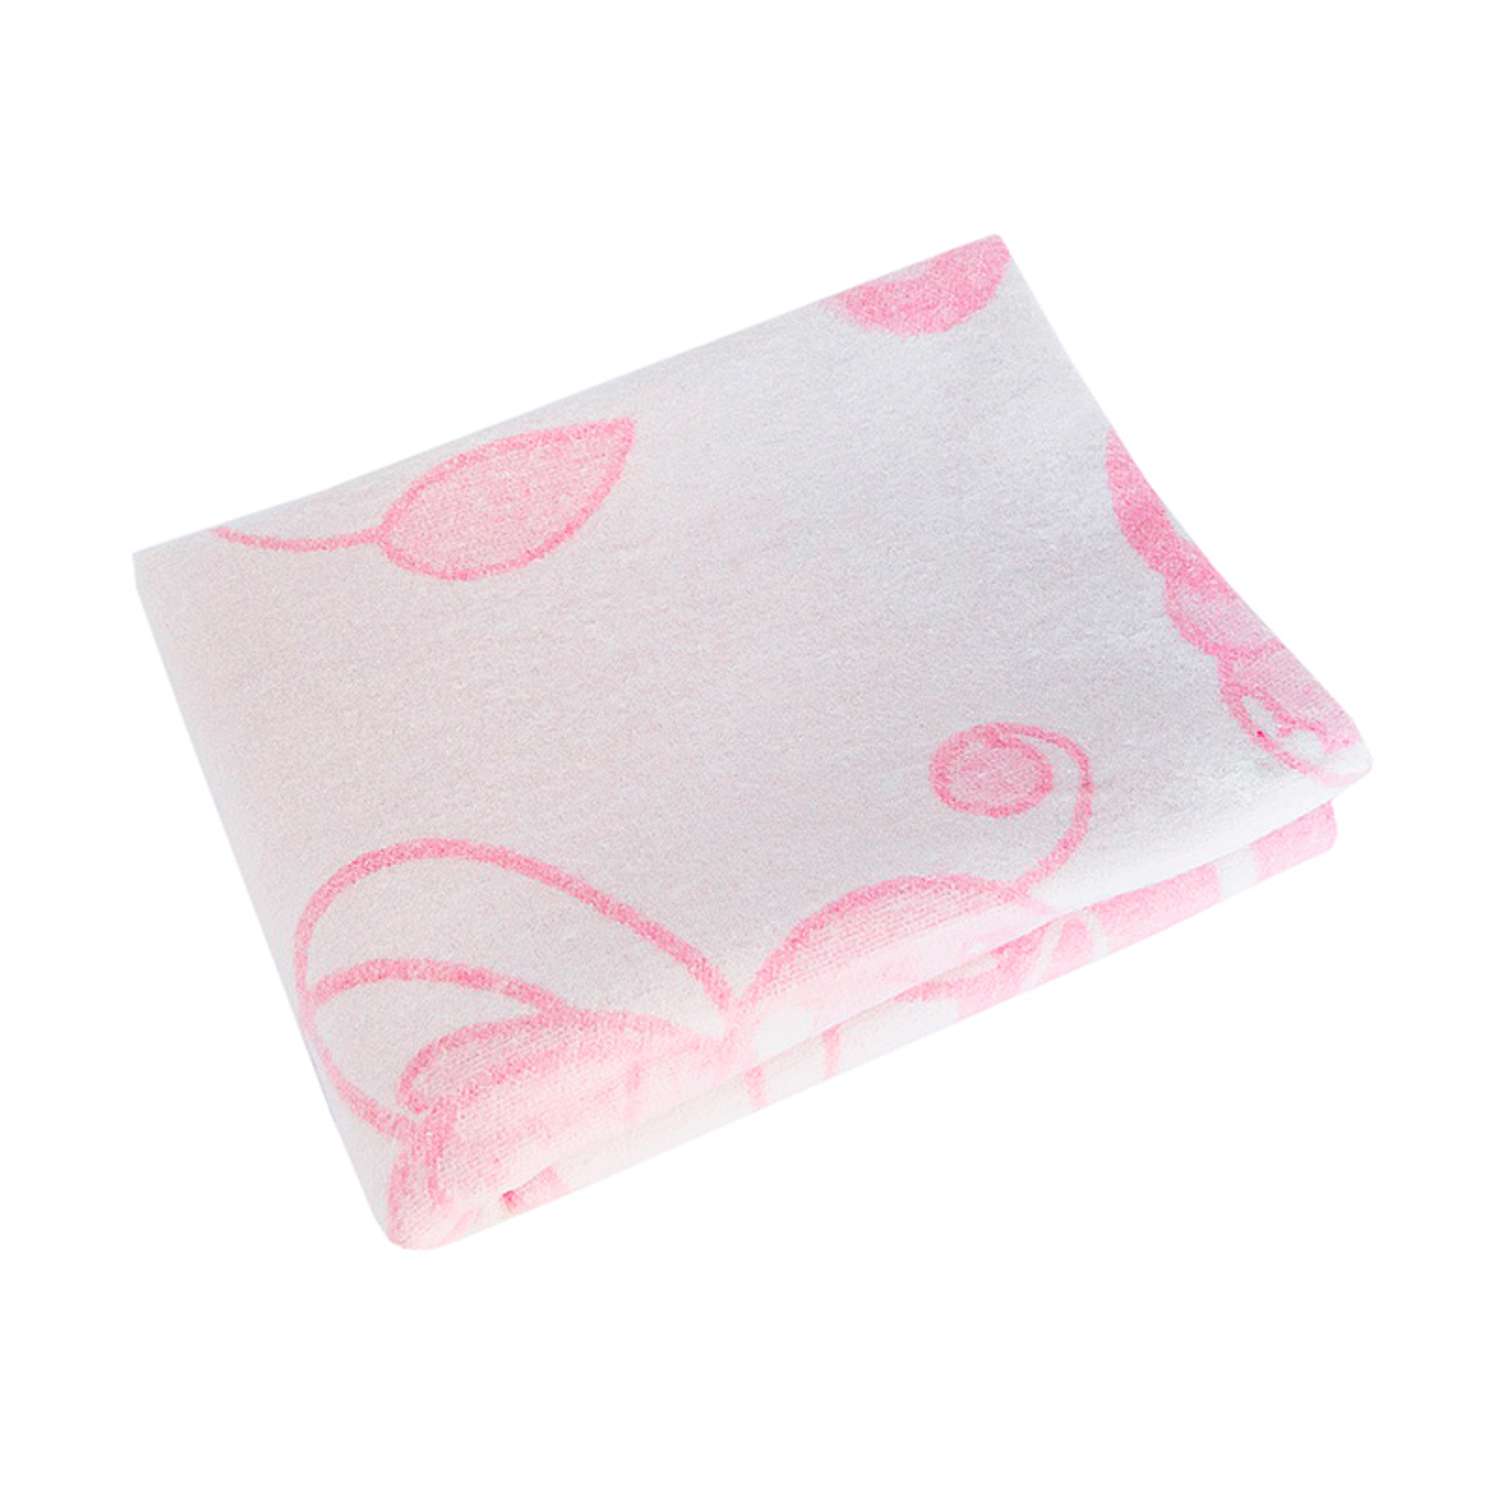 Одеяло байковое Споки Ноки жаккард 100х140 розовый - фото 5